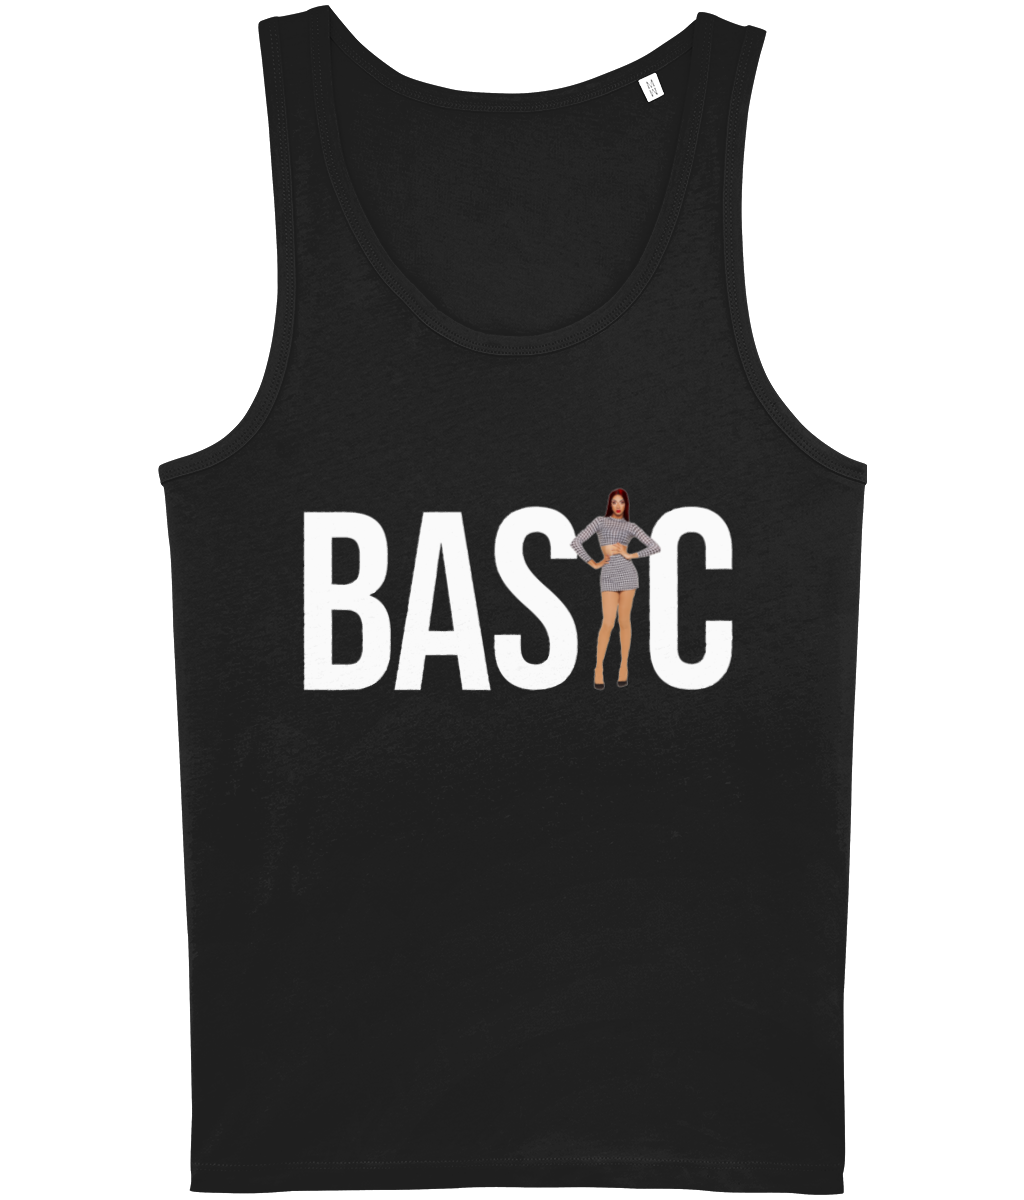 Tia Kofi - Official Merch - Basic Black Vest